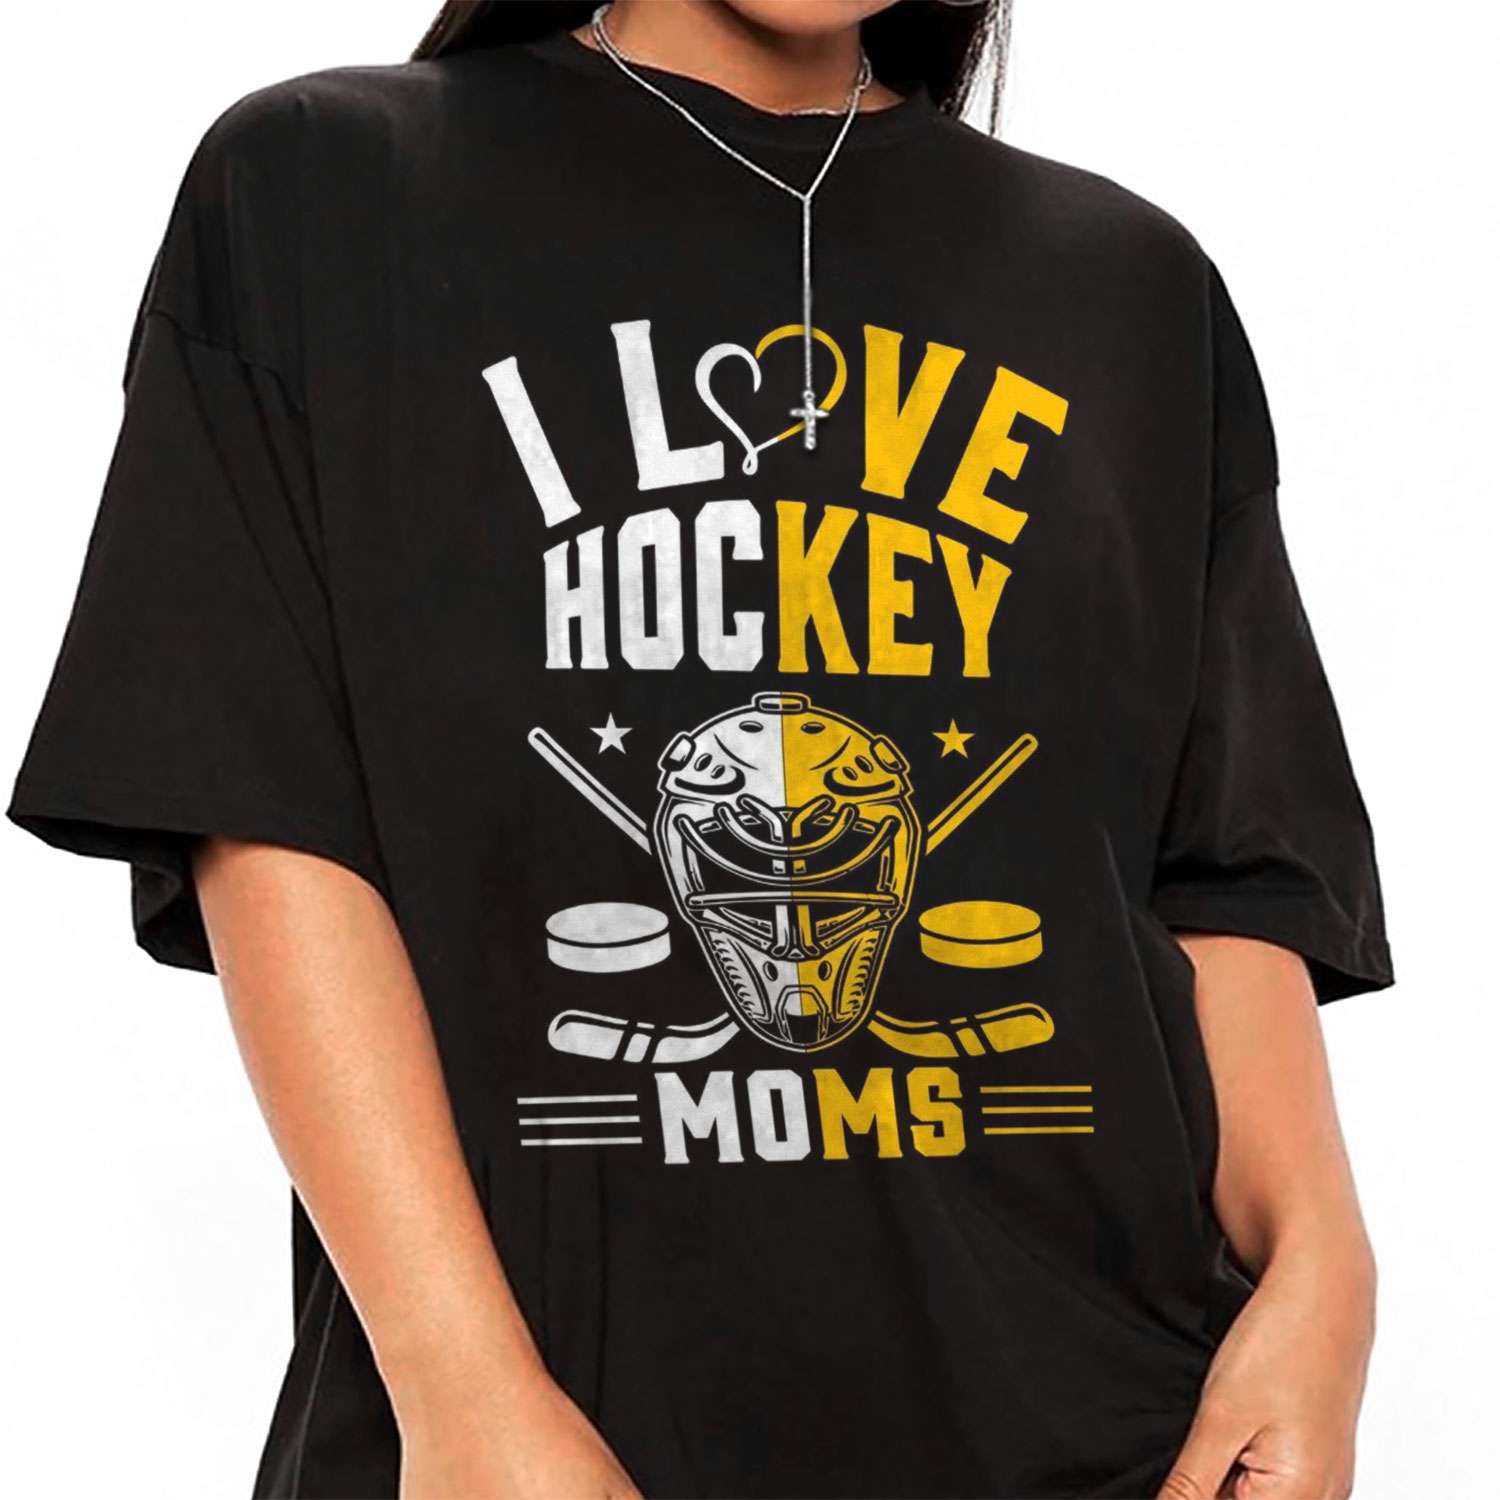 I Love Hockey Moms T-shirt